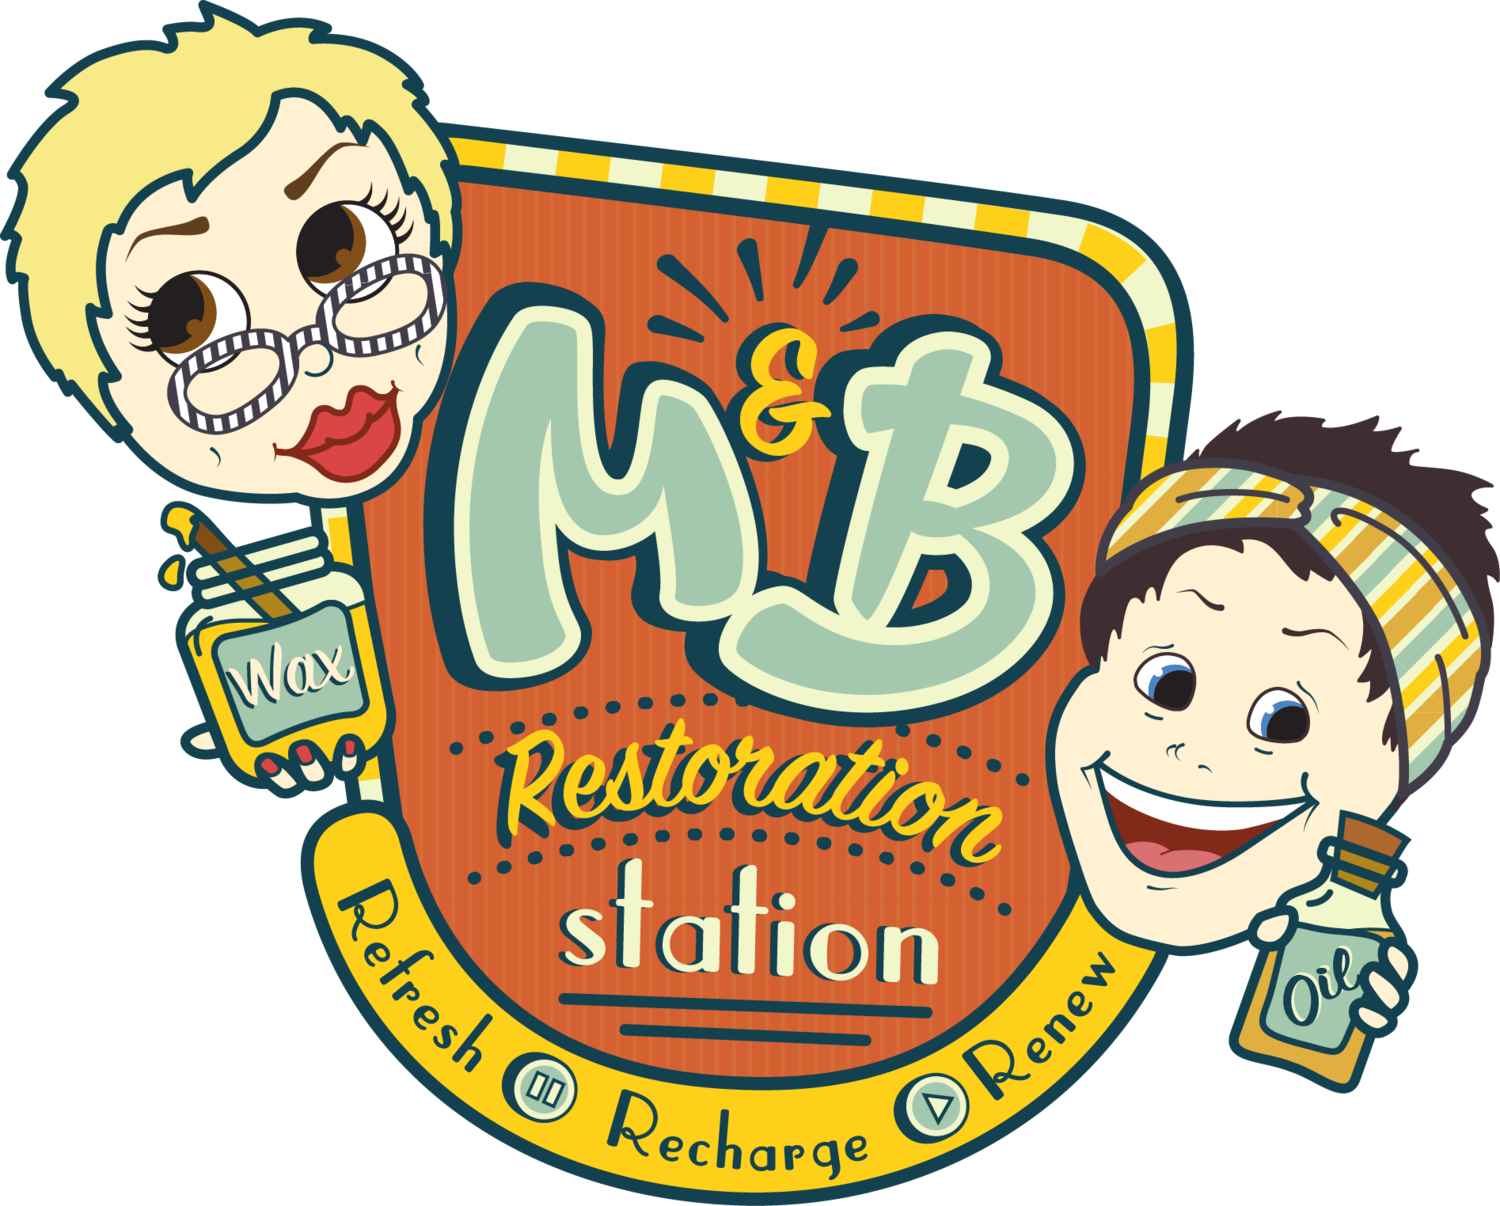 M&B Restoration Station